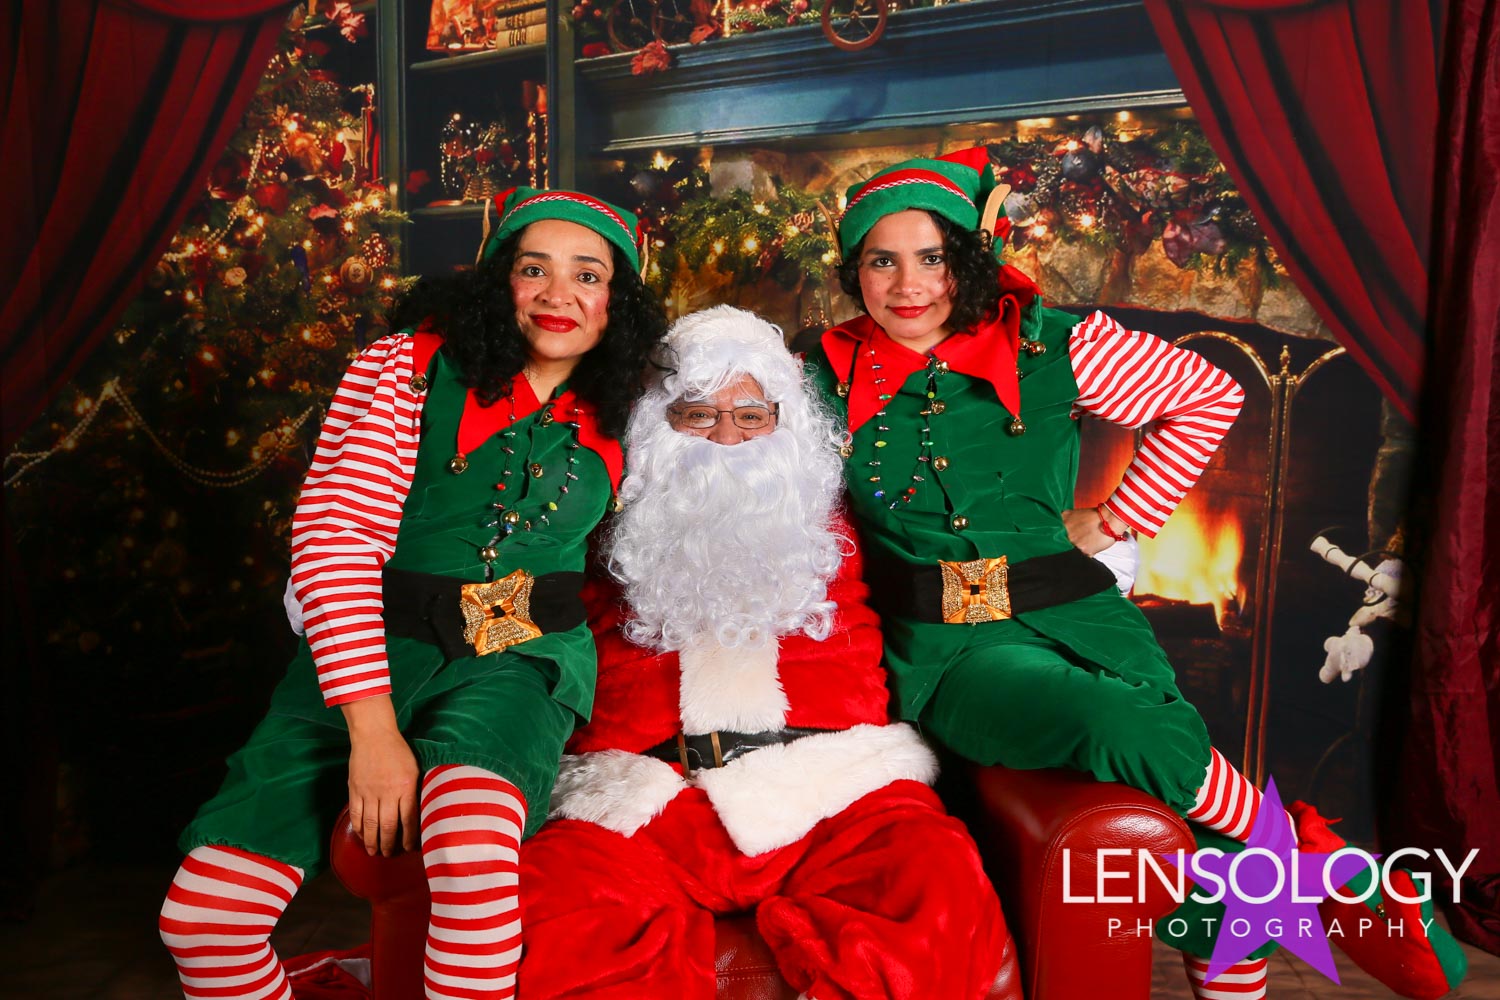 LENSOLOGY.NET - Sheraton Hotels Christmas Santa Shoot, LA, CA.
All images are copyright of Lensology.net
Email: info@lensology.net
www.lensology.net